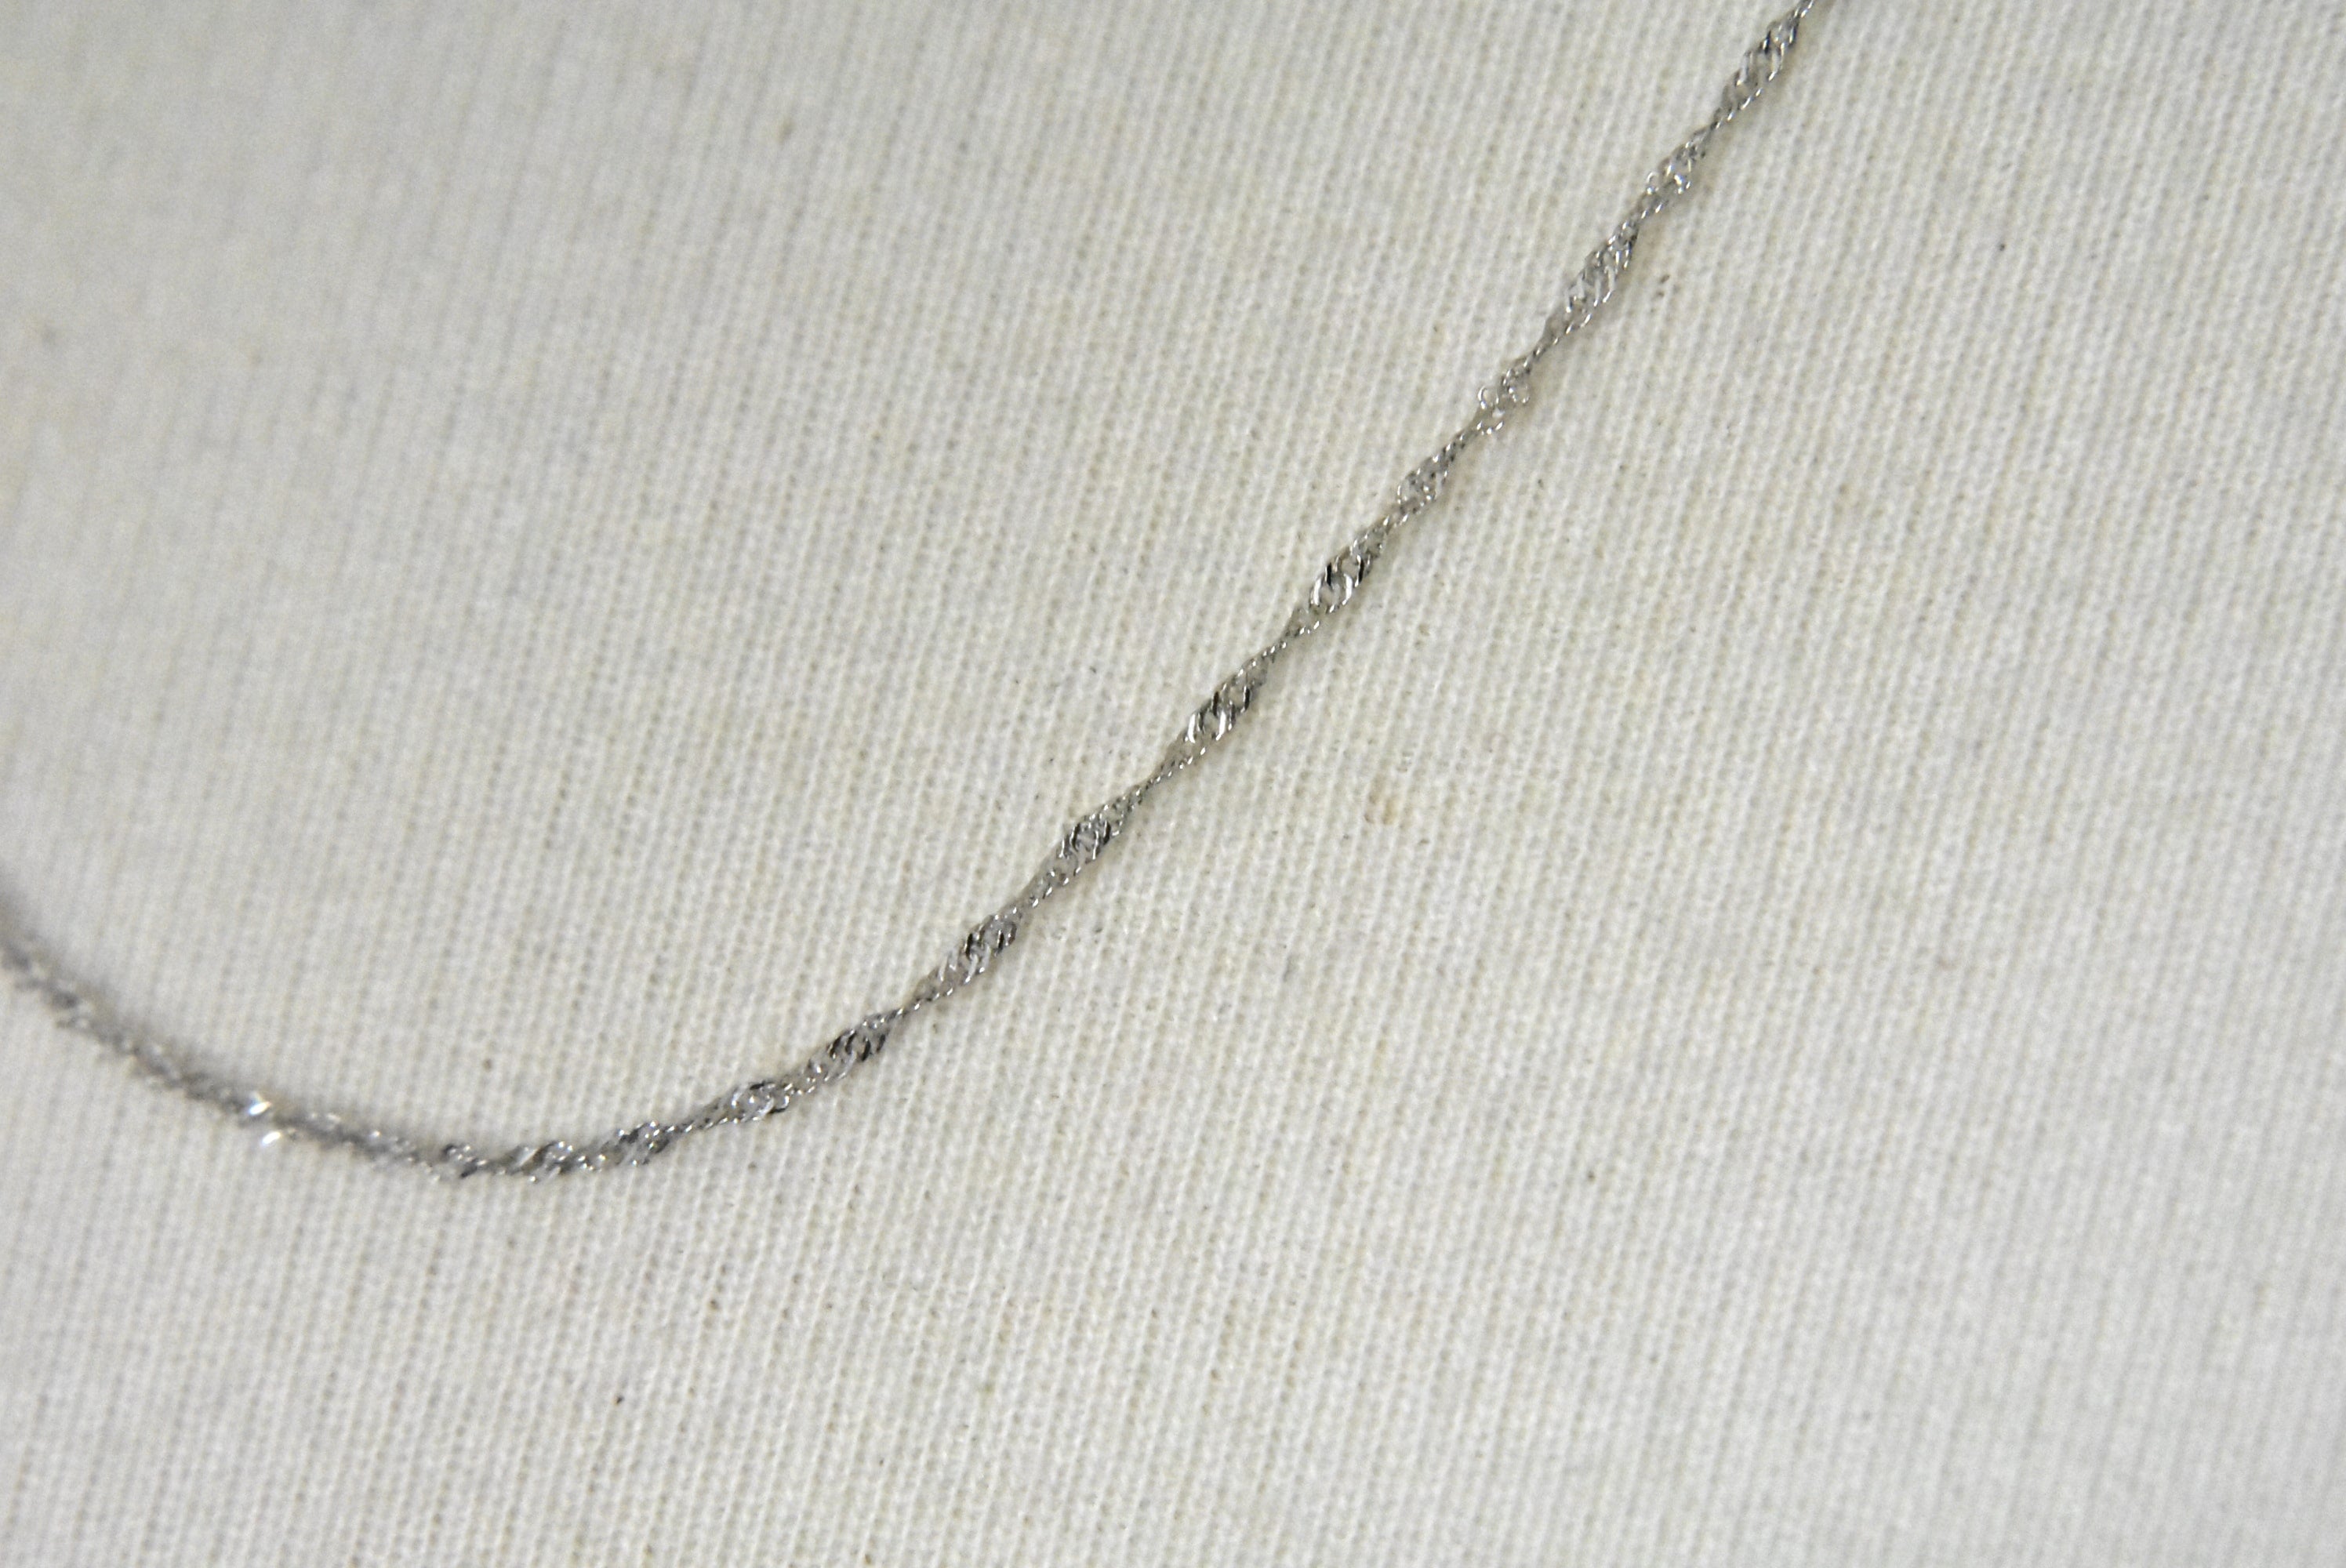 14k White Gold 1mm Singapore Twisted Bracelet Anklet Necklace Choker Pendant Chain